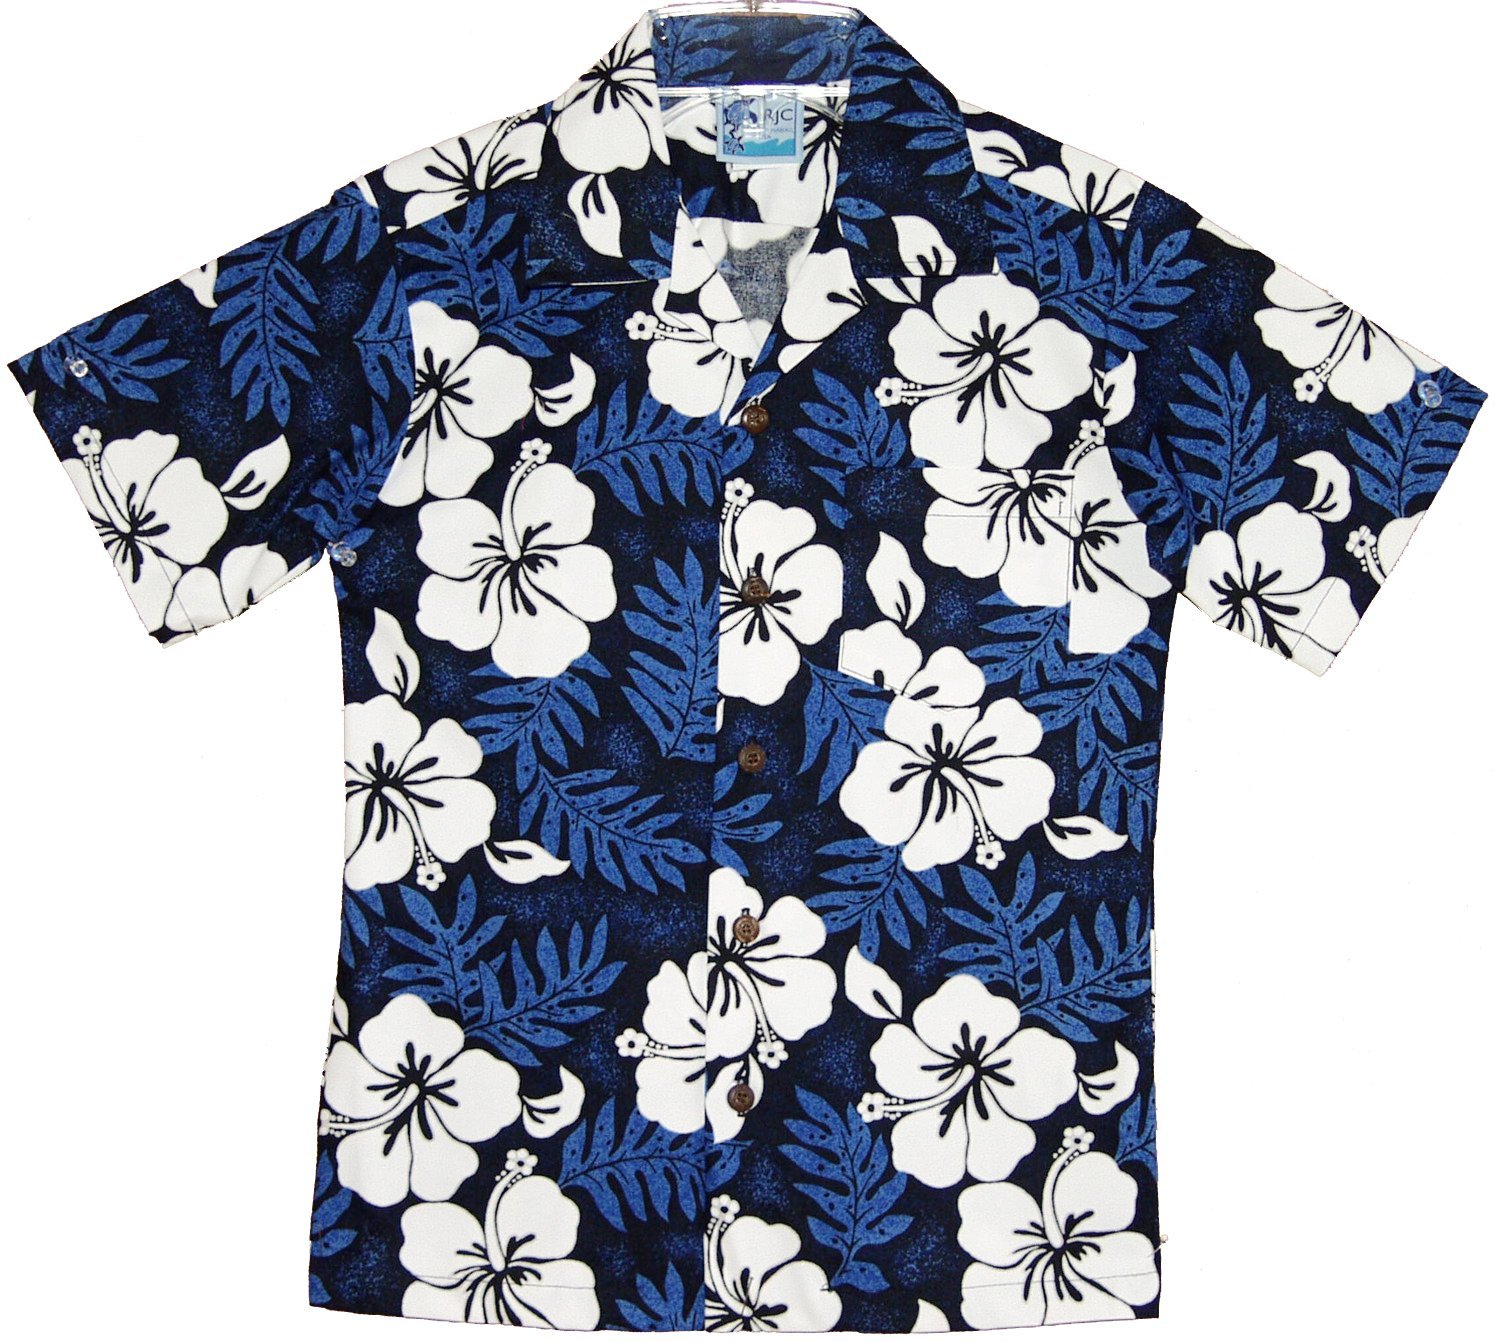 Free Hawaiian Shirts Cliparts, Download Free Clip Art, Free Clip Art.